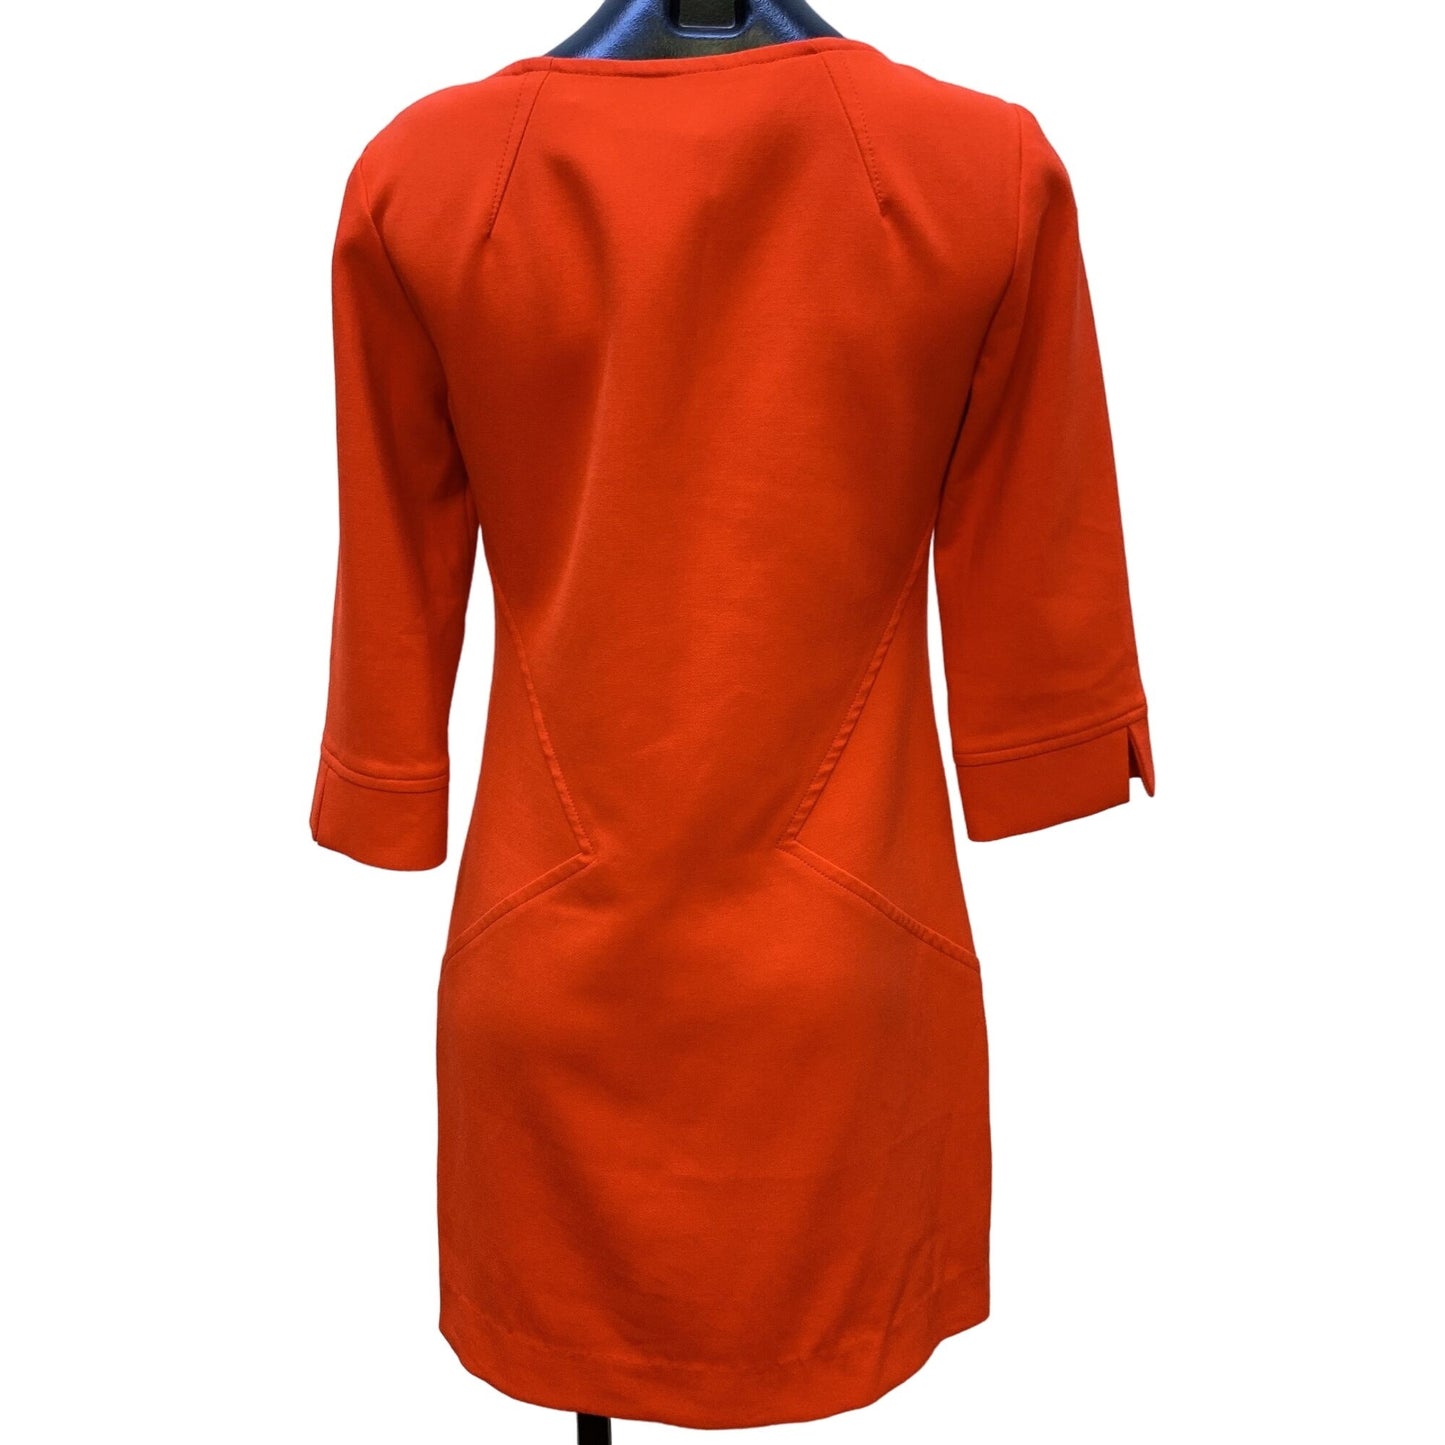 *Trina Turk Orange Dress Size 4